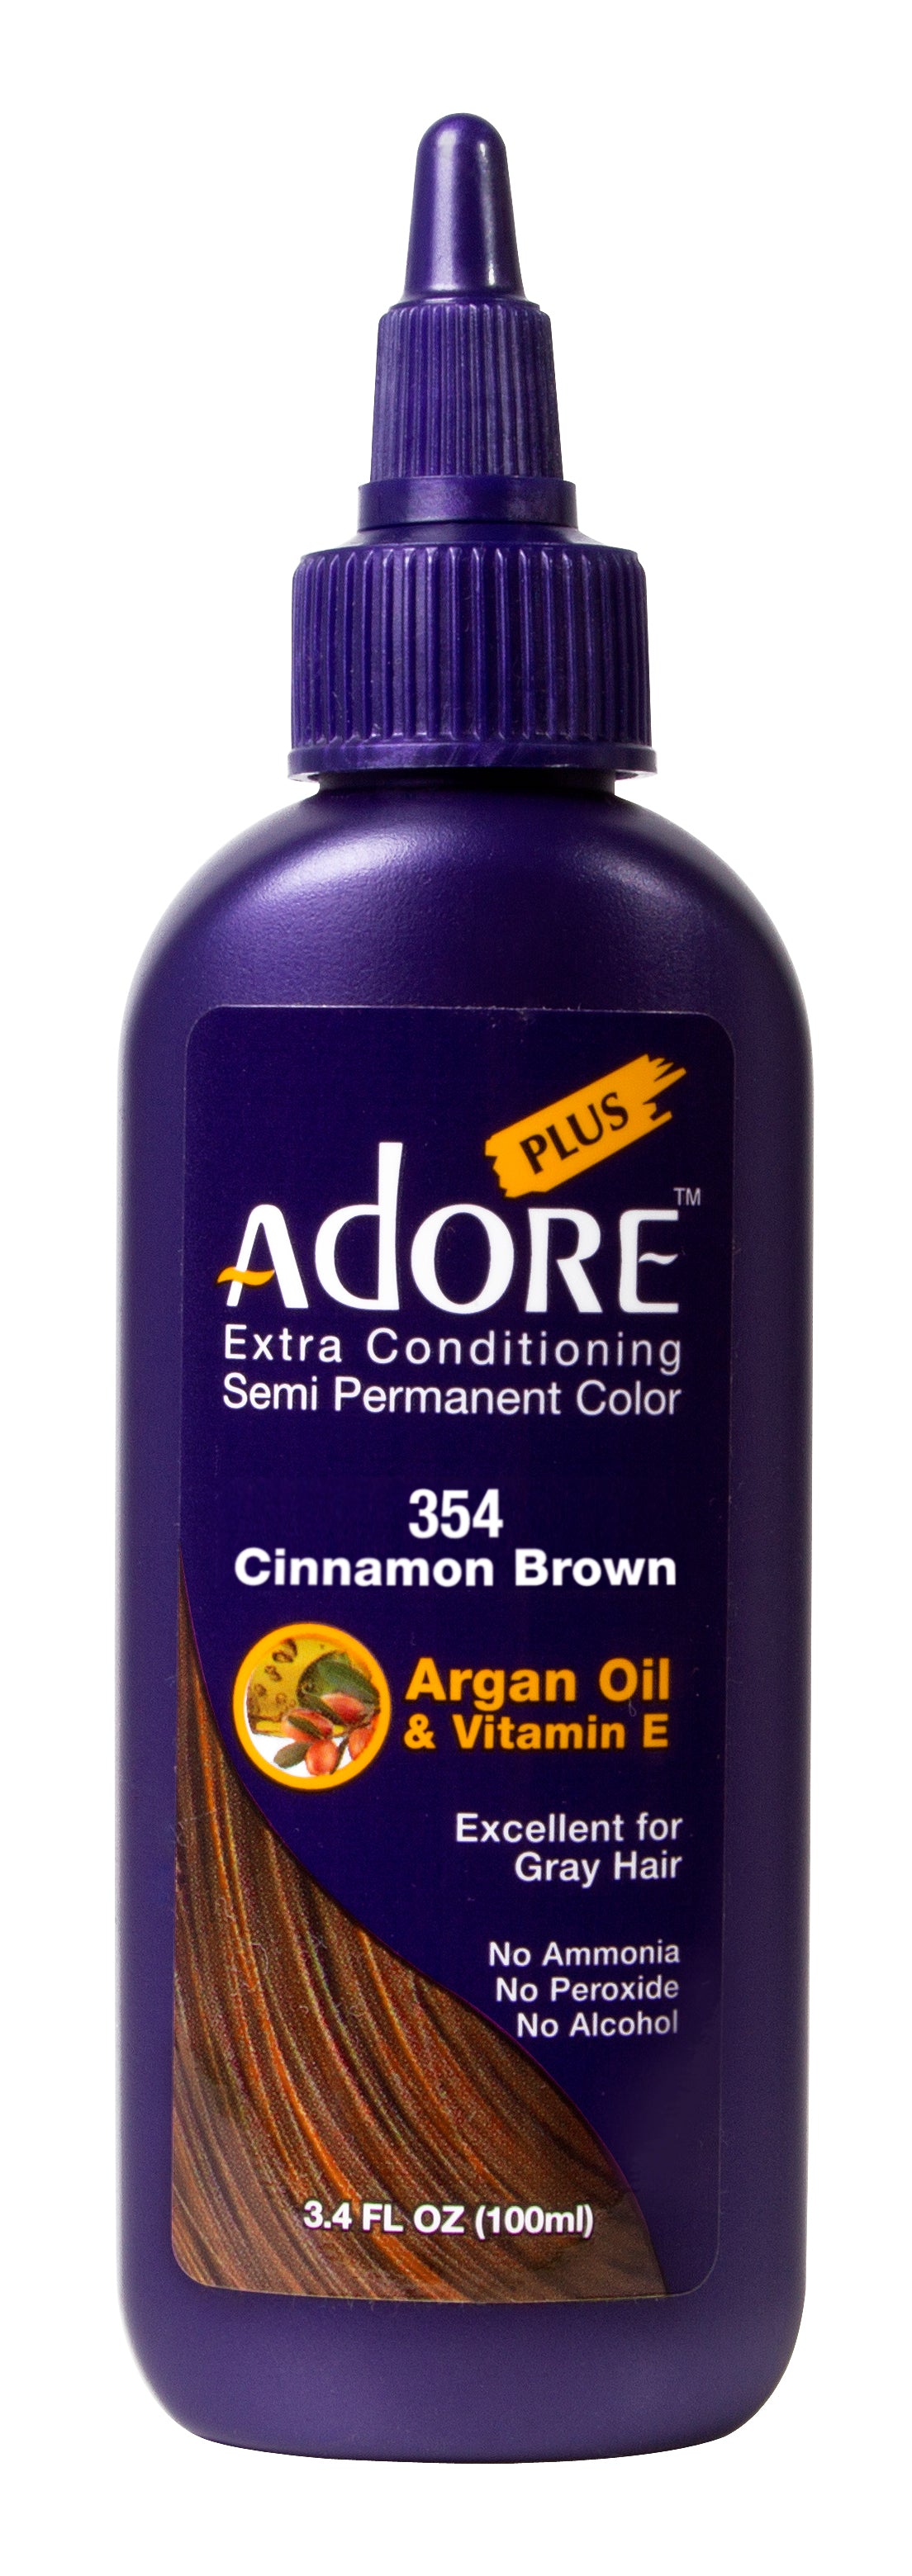 Adore Cinnamon Brown #354